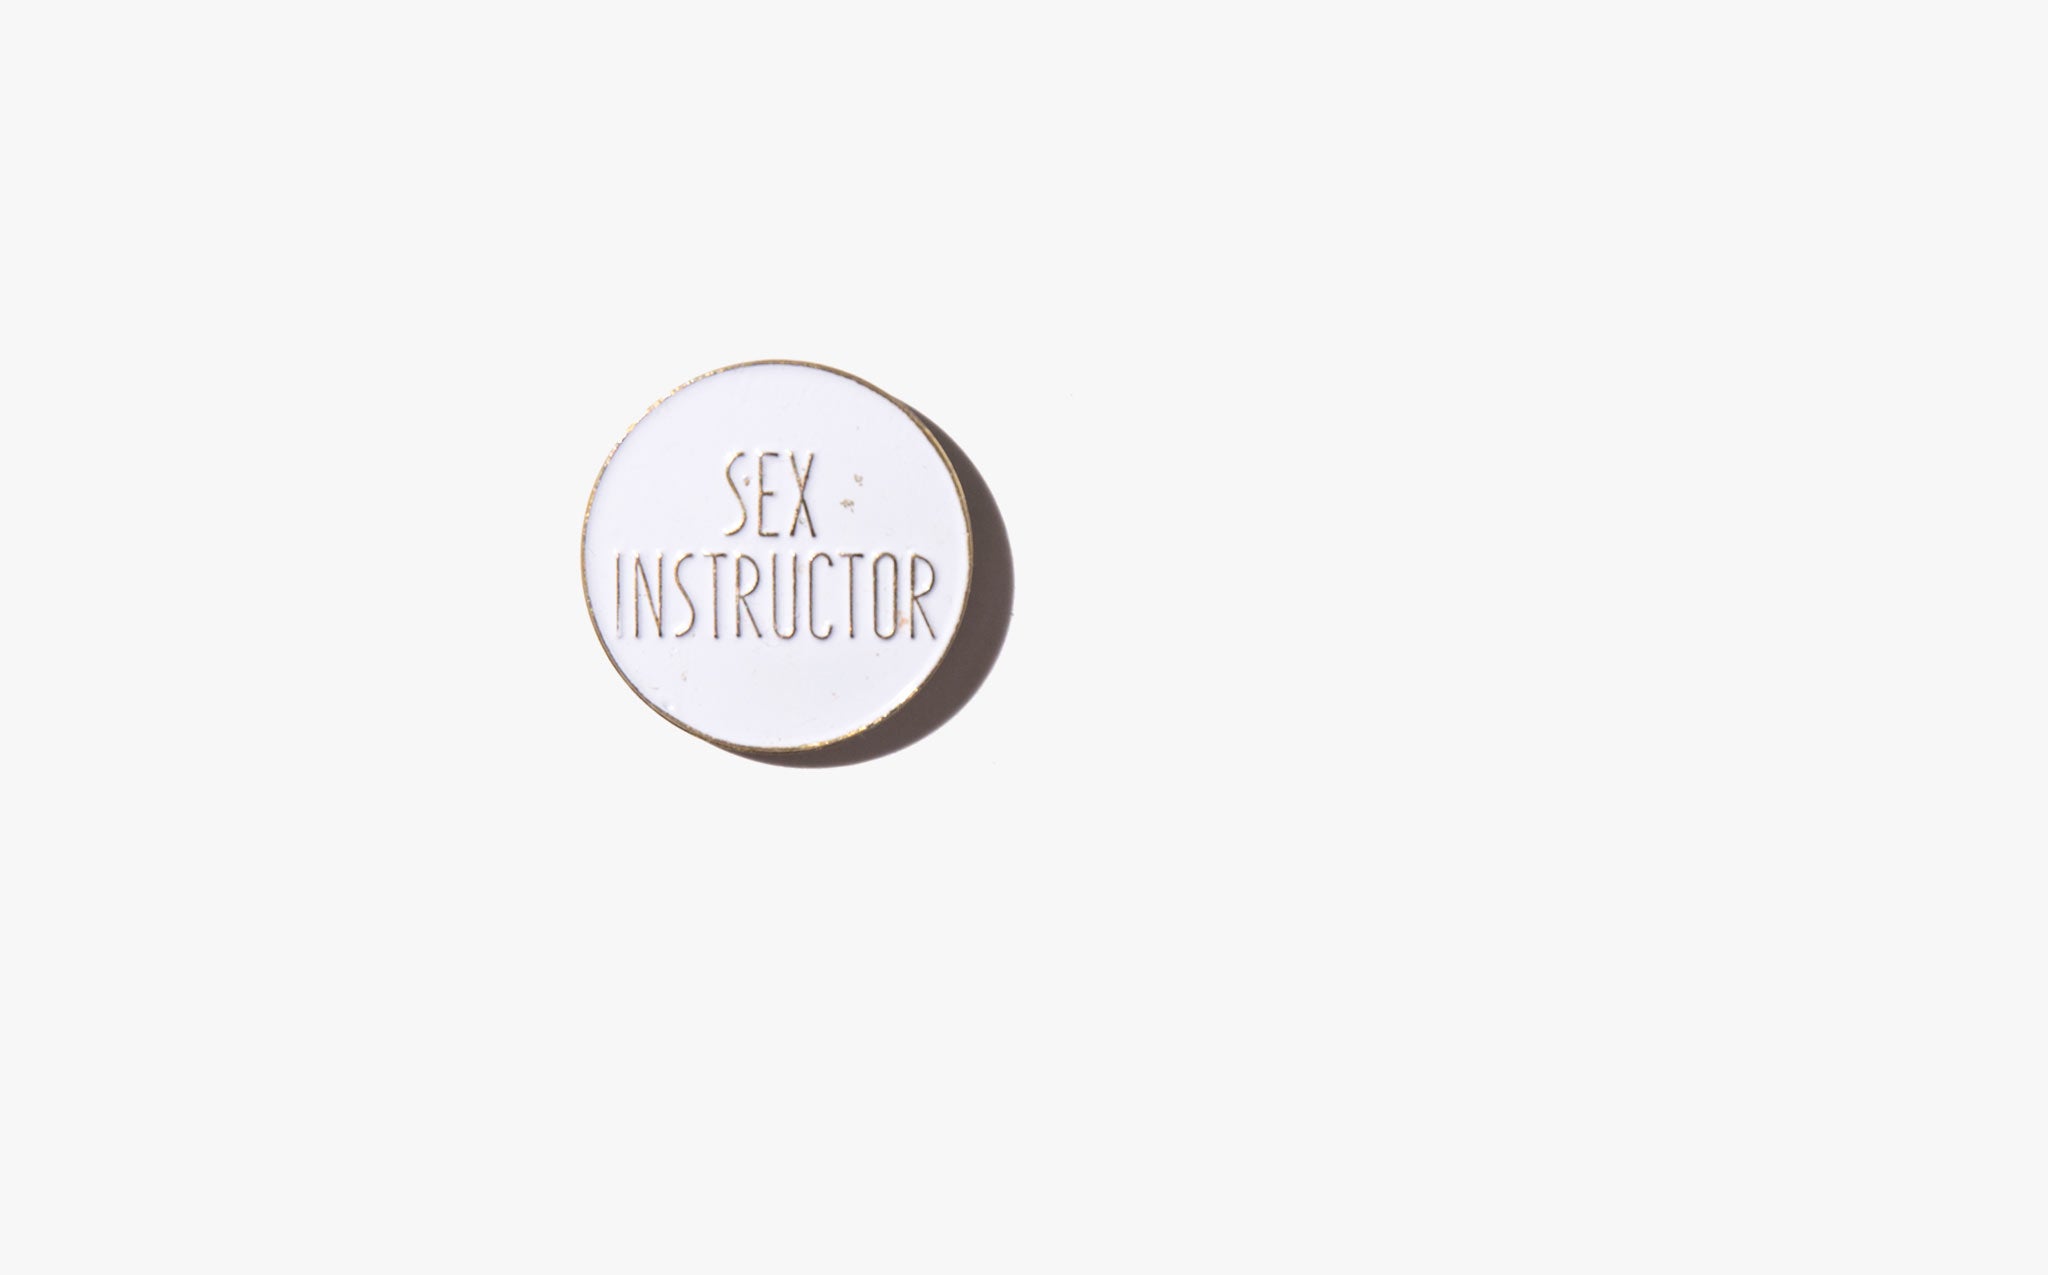 Sex Instructor Vintage Pin